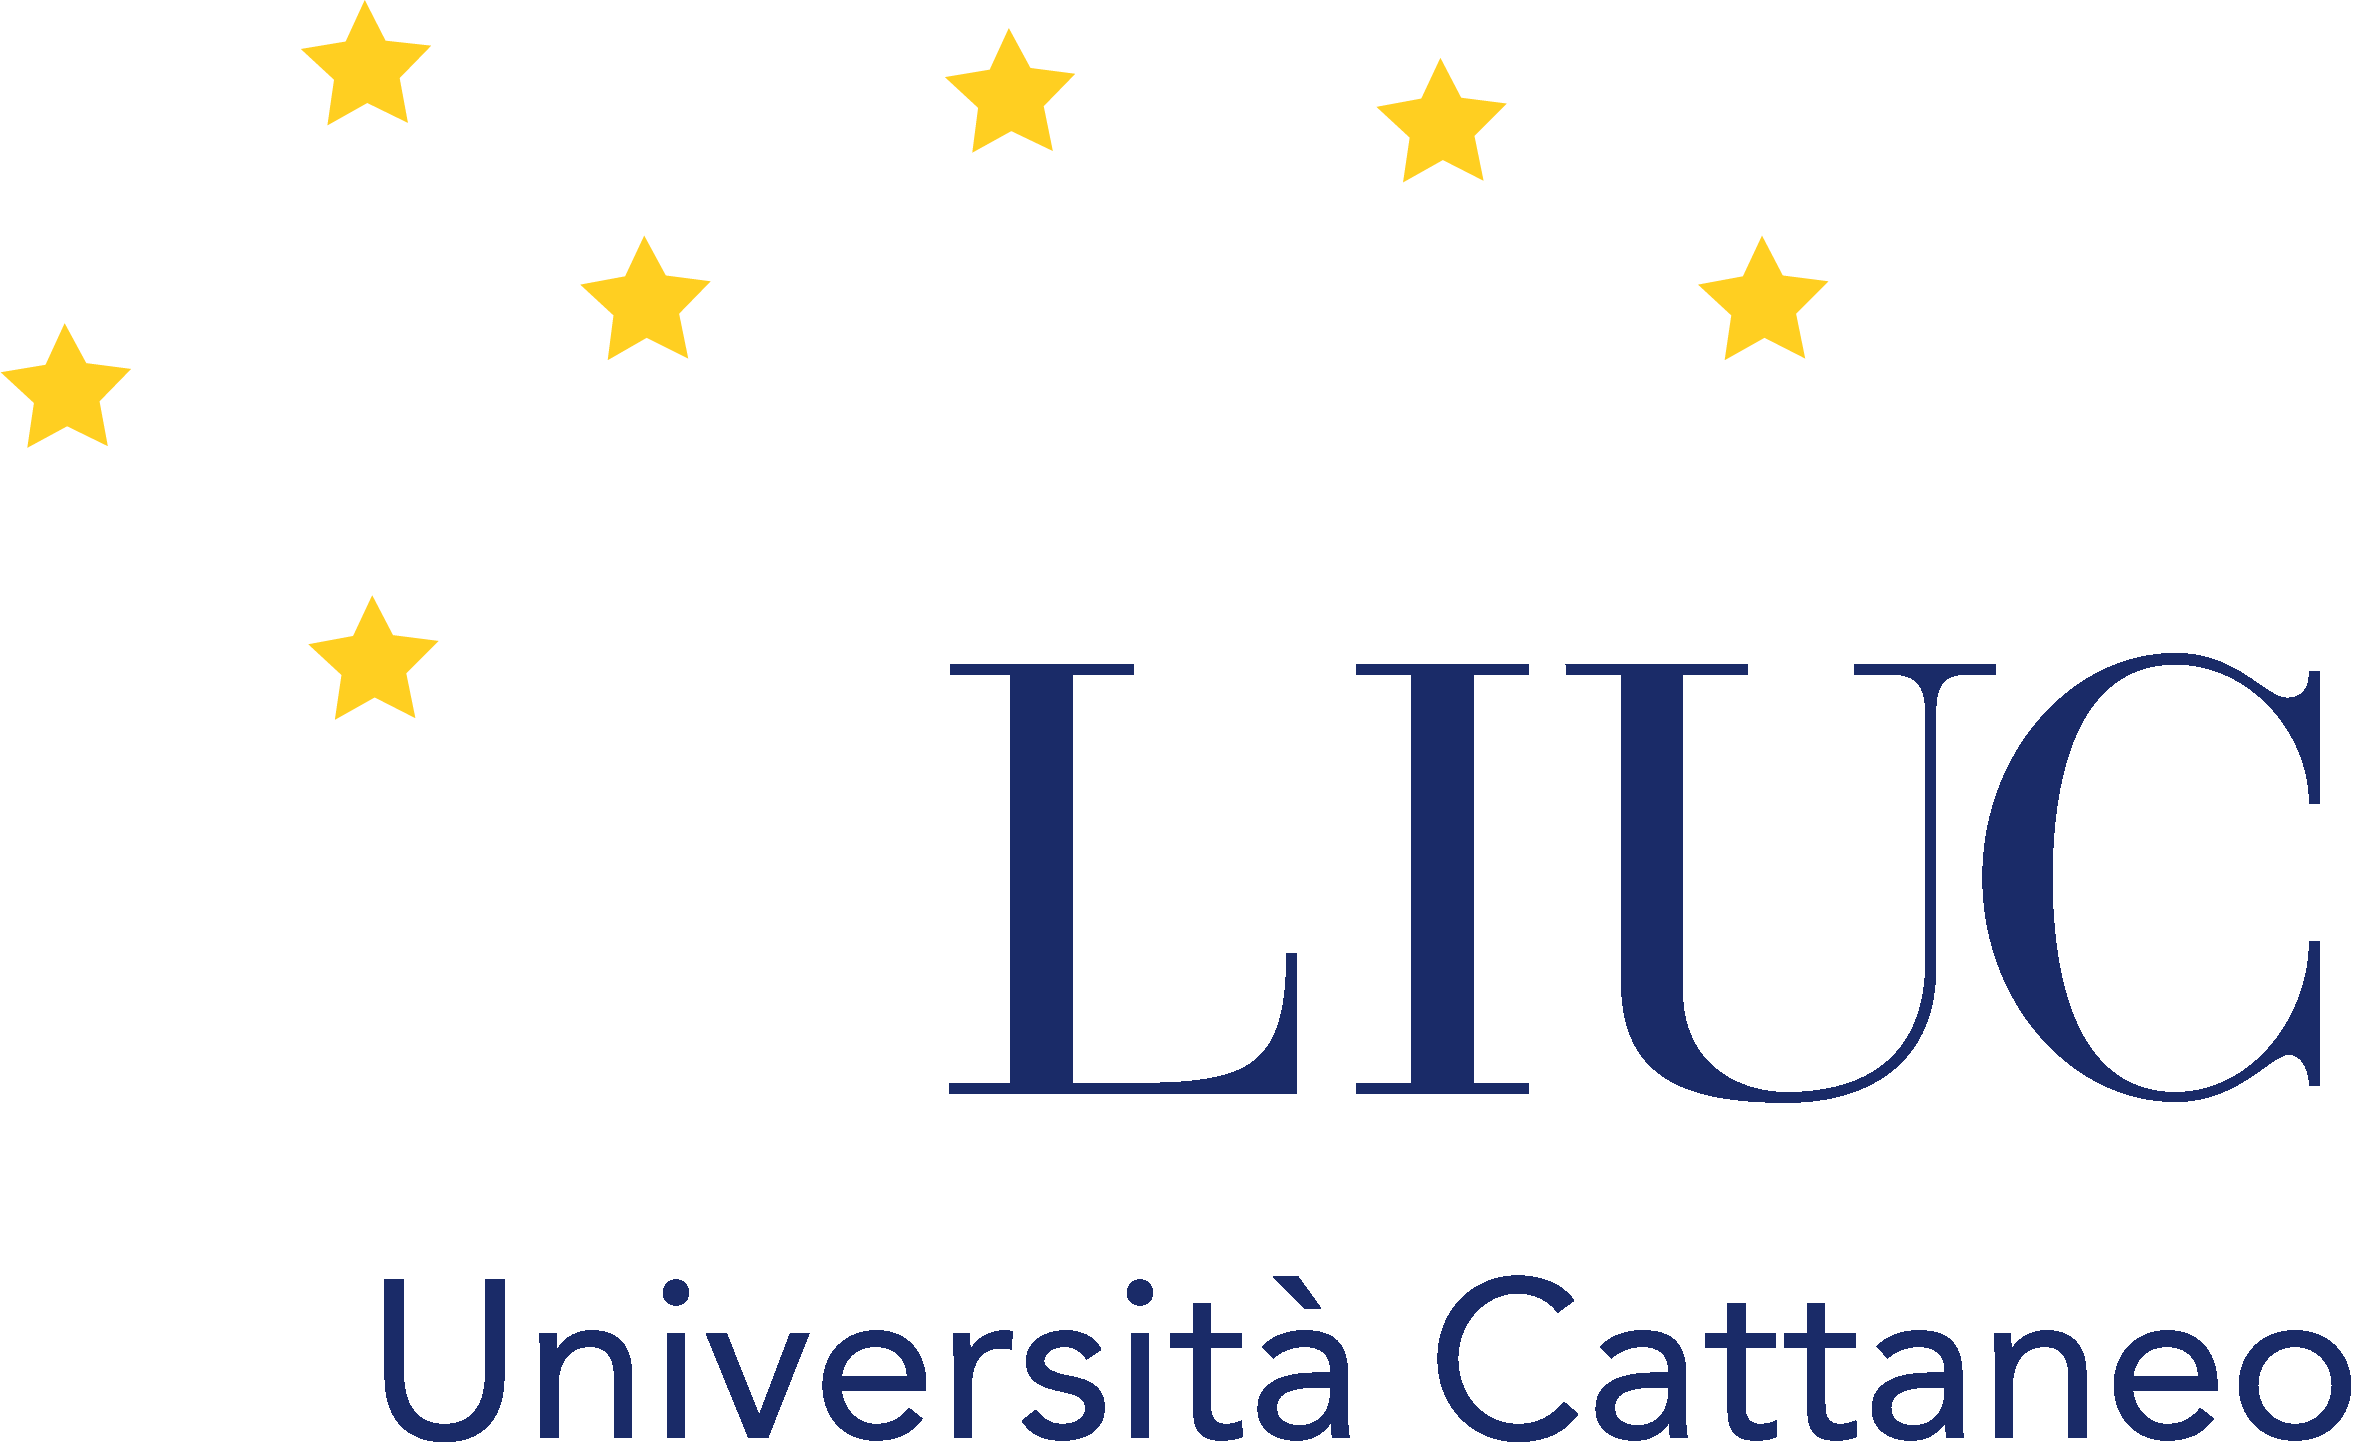 University Carlo Cattaneo logo